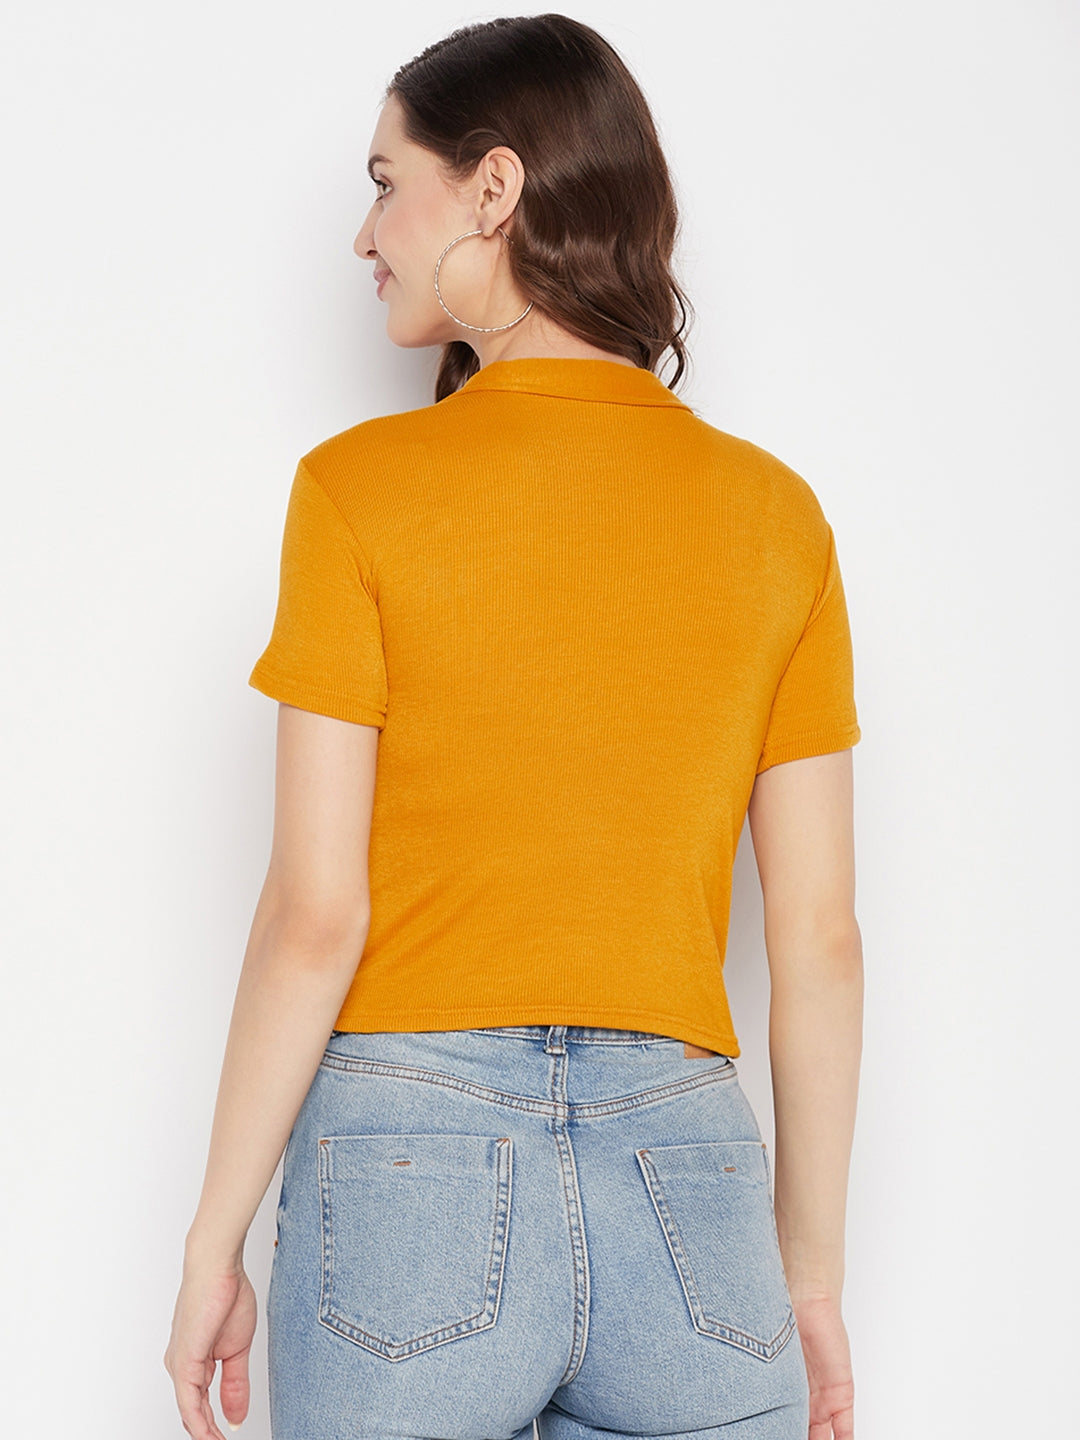 Clora Mustard Solid Shirt Collar Crop Top